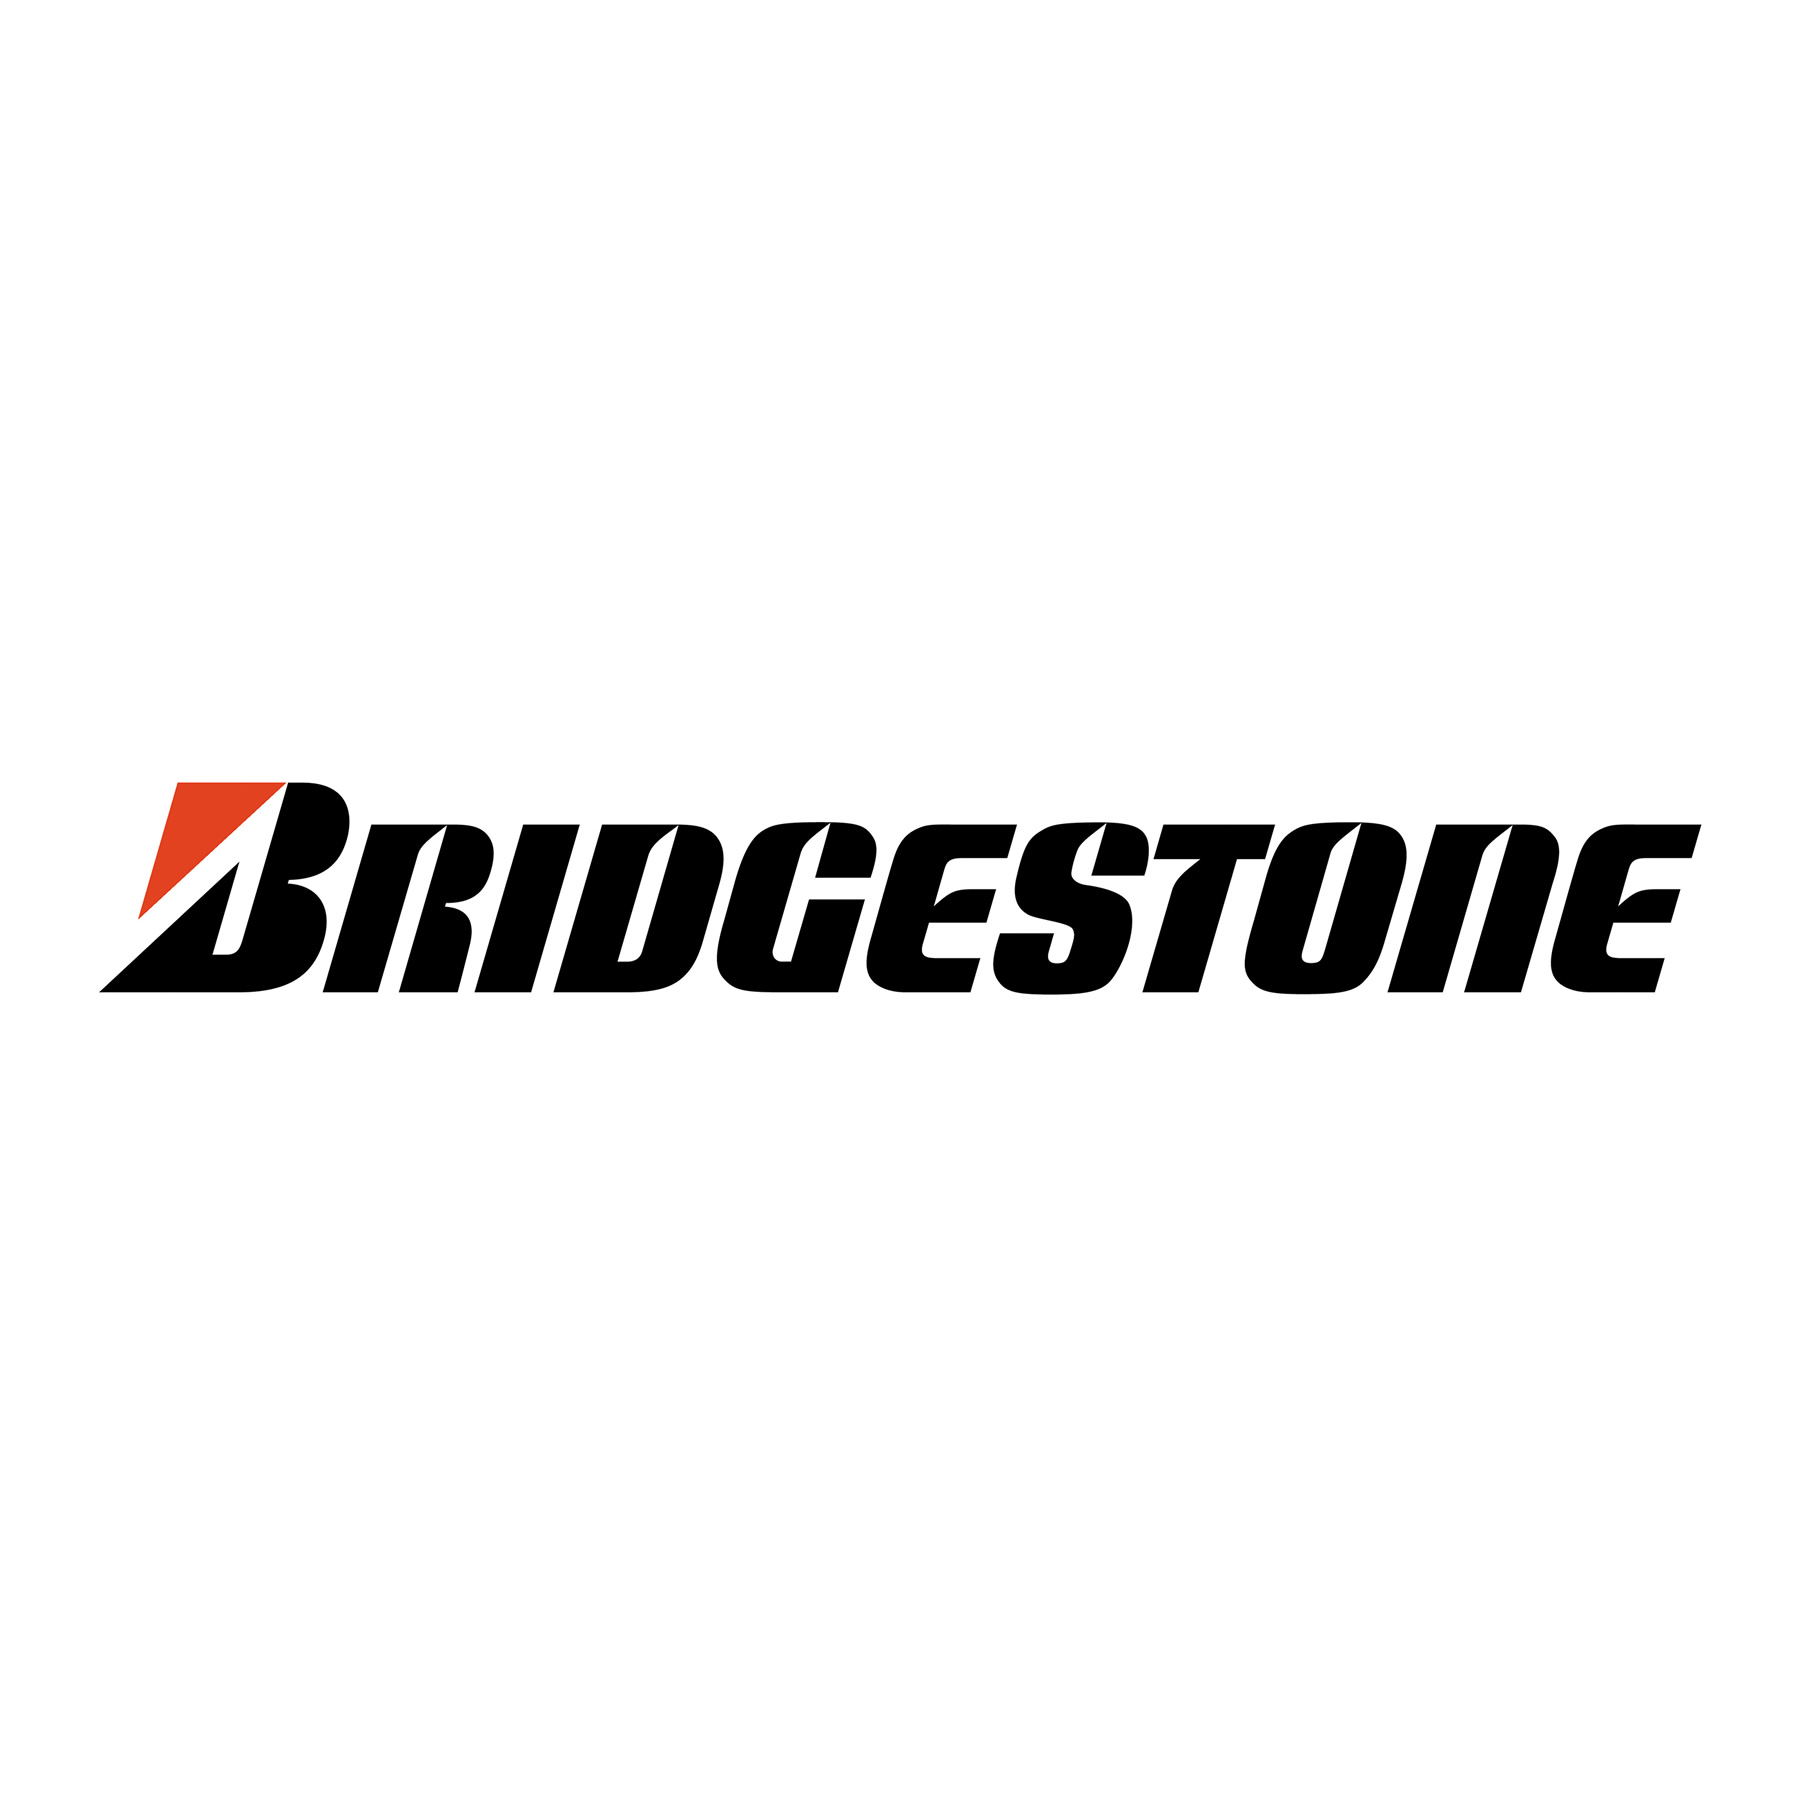 Bridgestone Corporate Offices